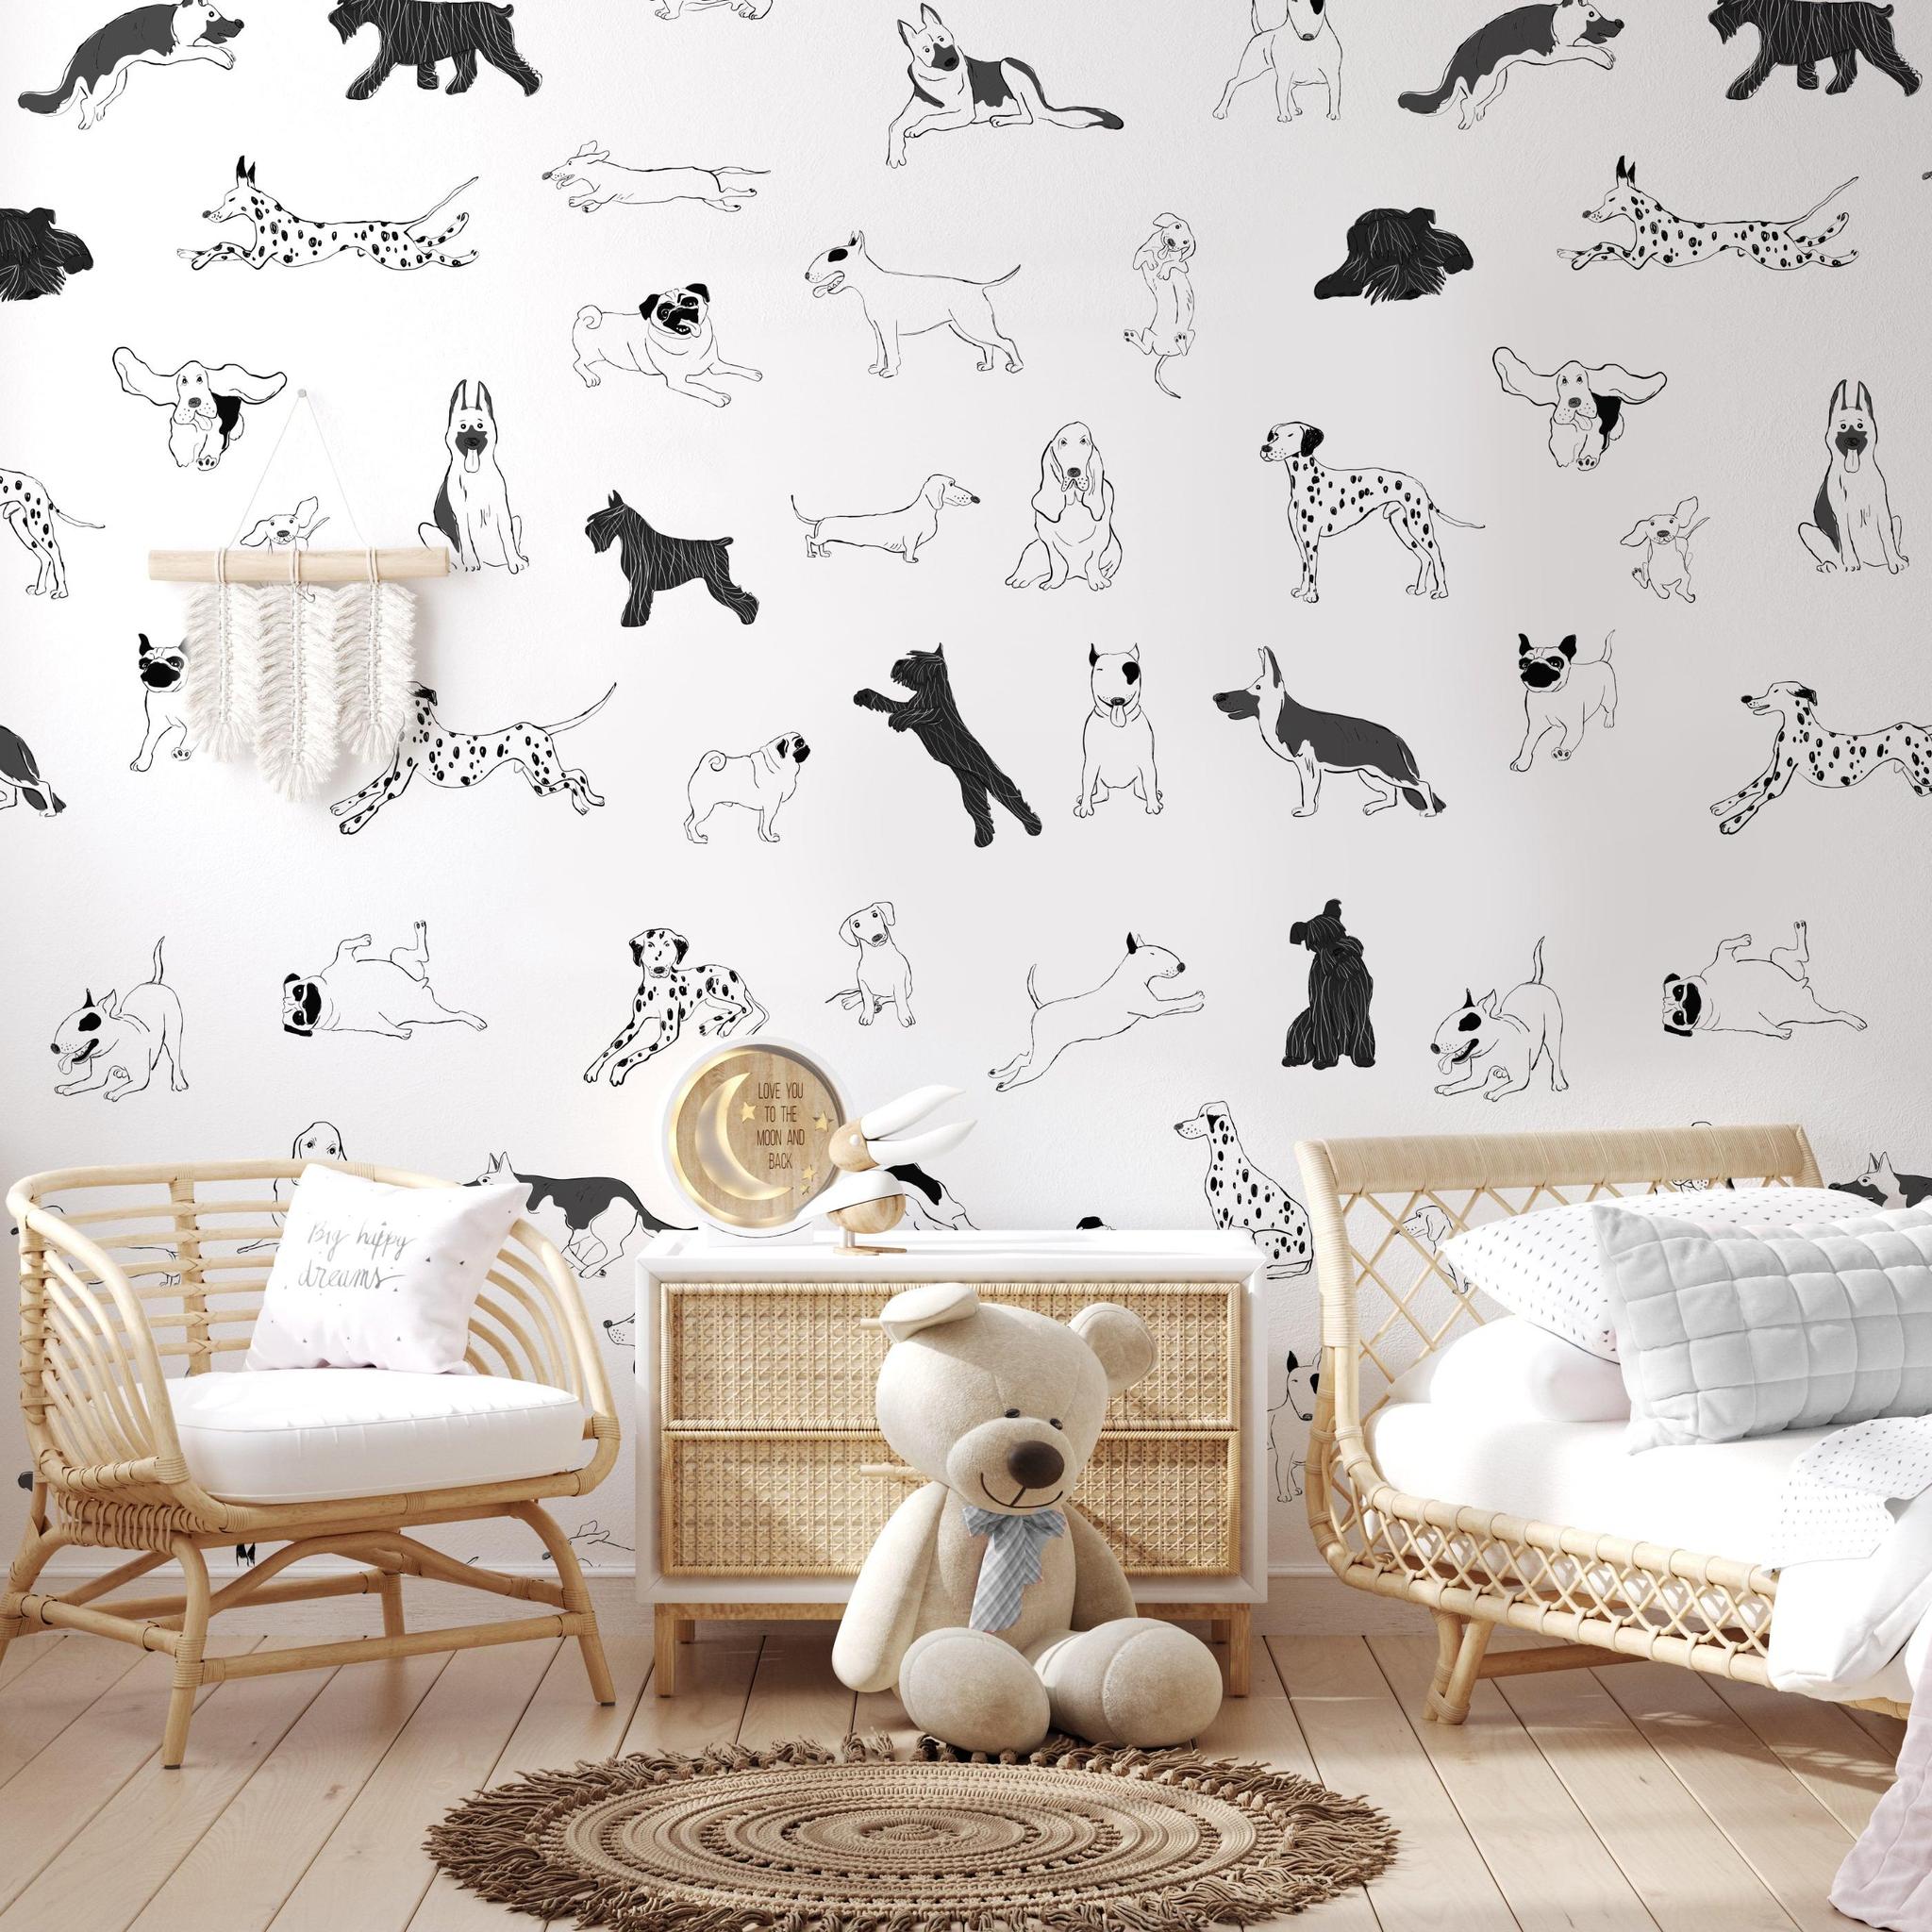 puppy love wallpaper